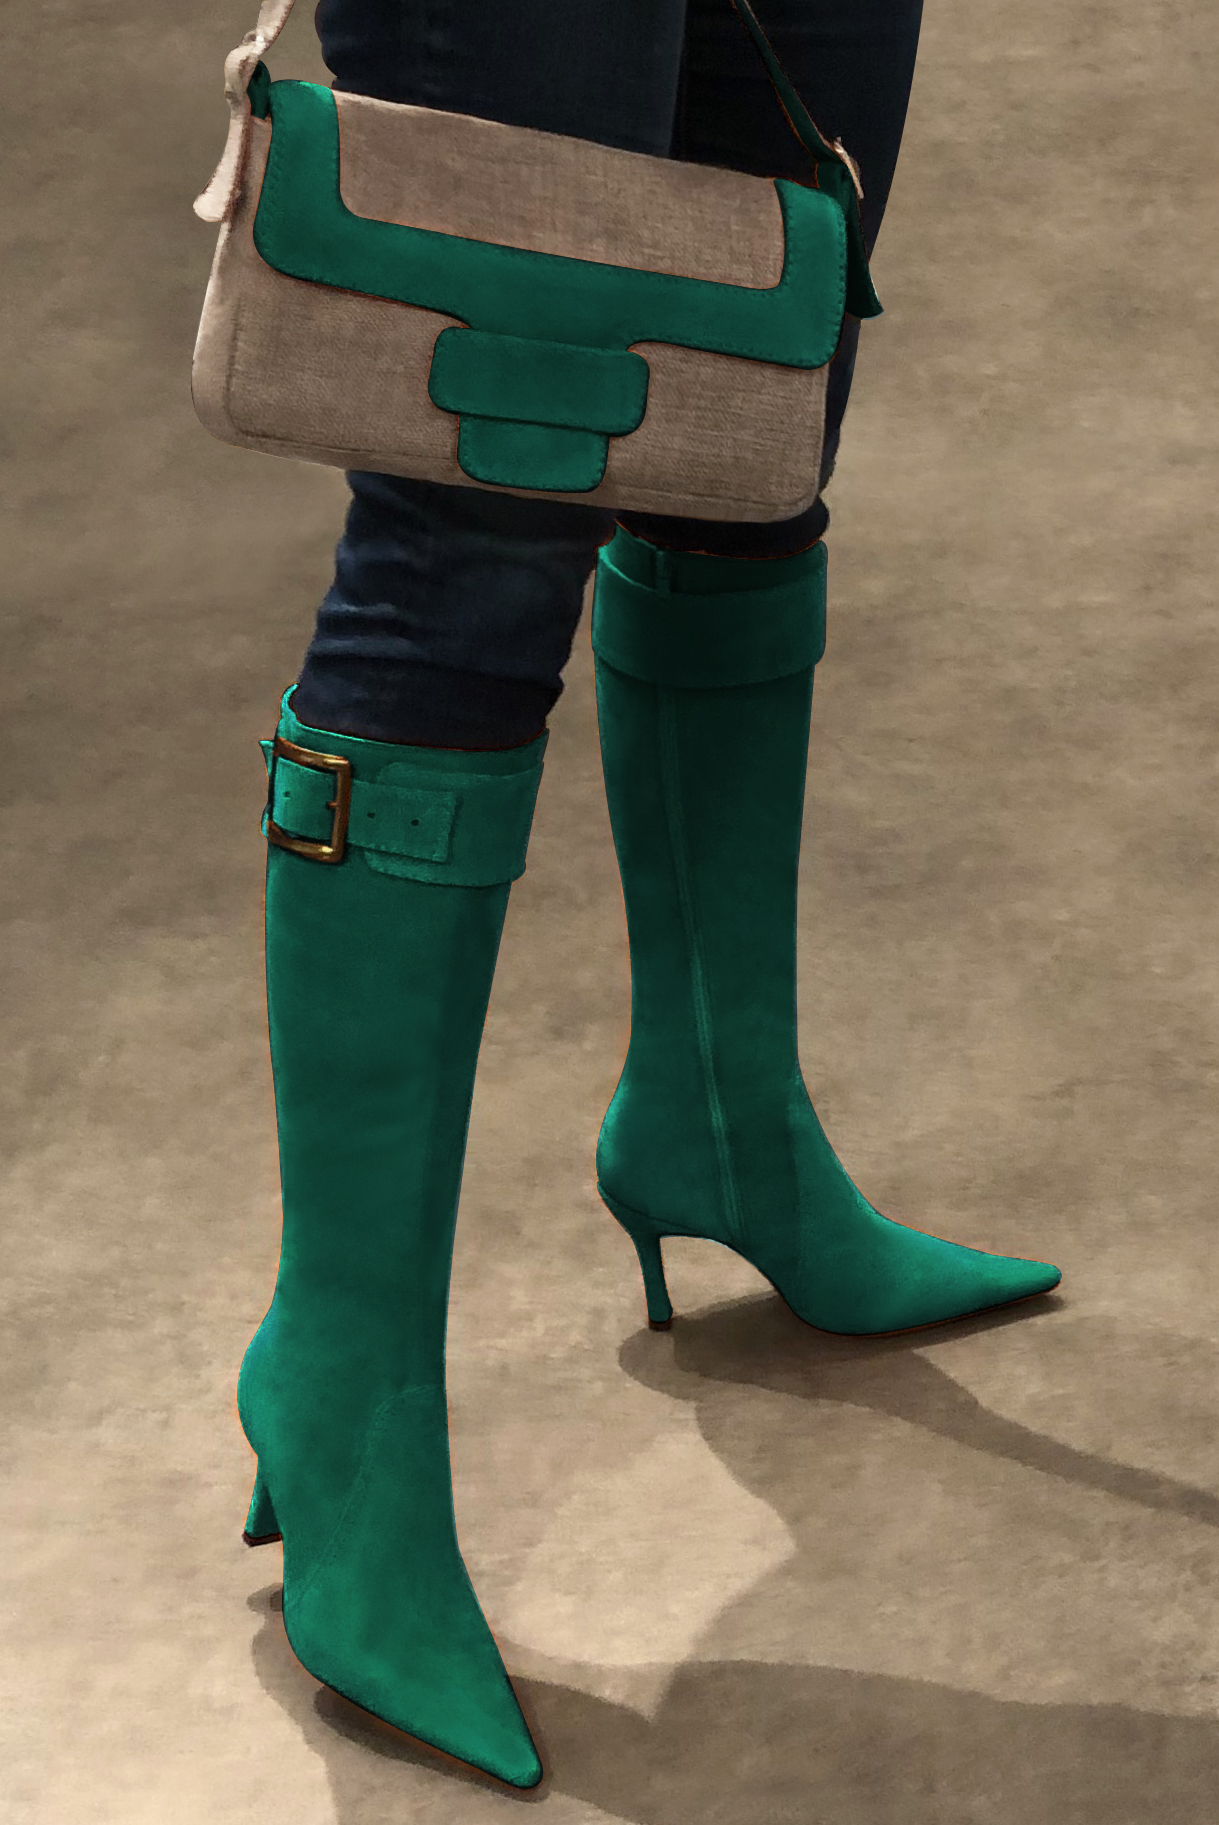 Emerald green women's feminine knee-high boots. Pointed toe. Very high spool heels. Made to measure. Worn view - Florence KOOIJMAN